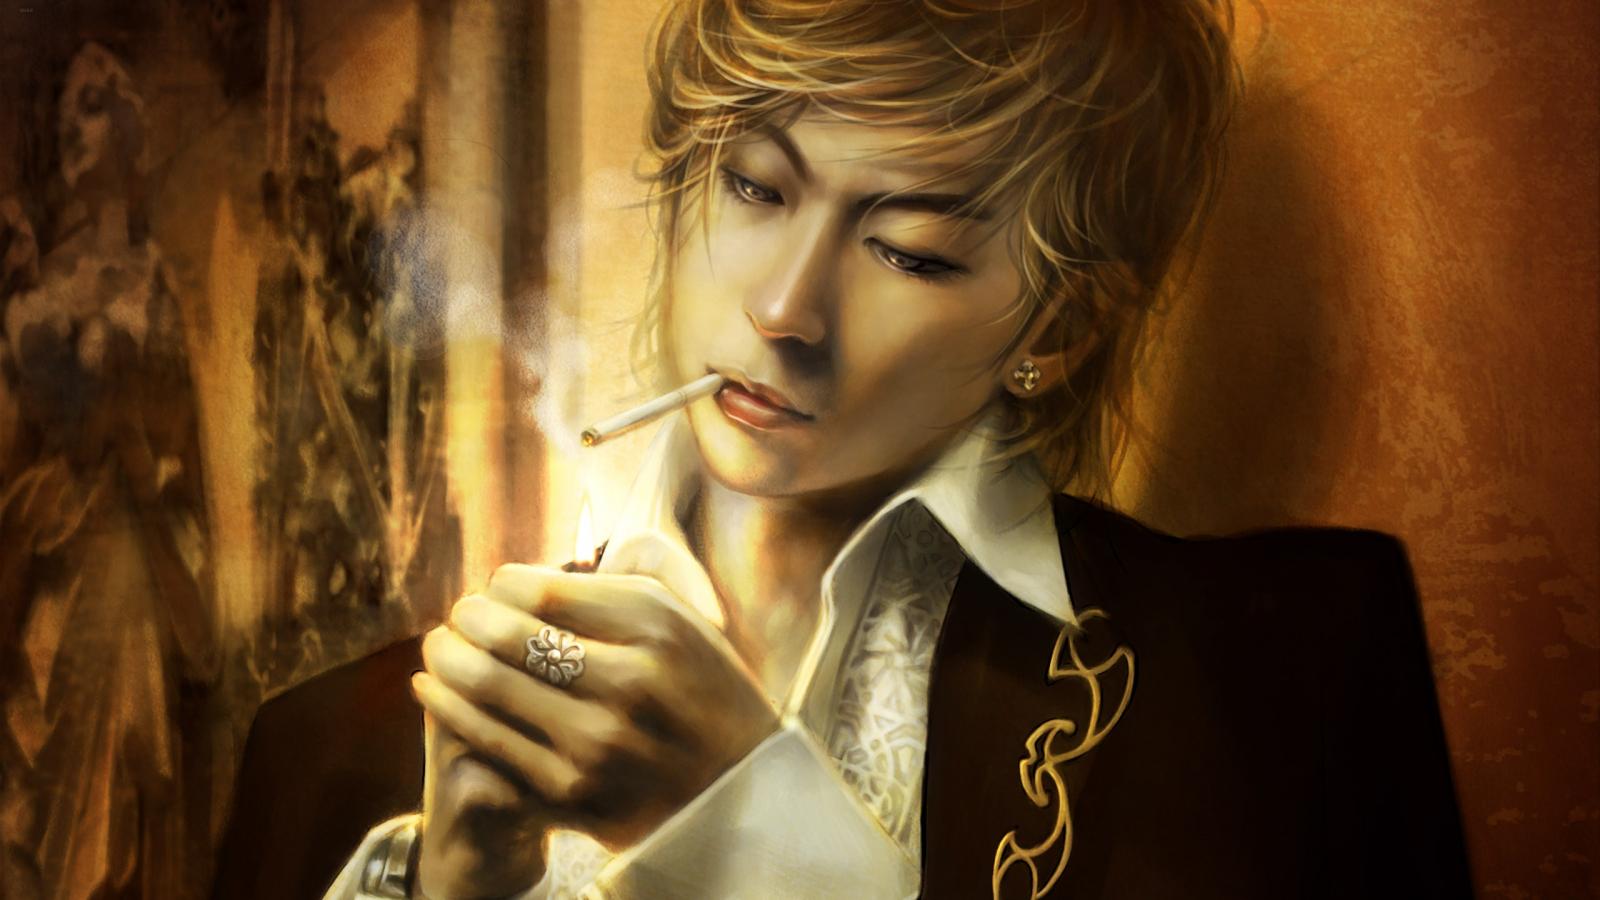 smoking boy wallpaper,beauty,lip,portrait,blond,photography